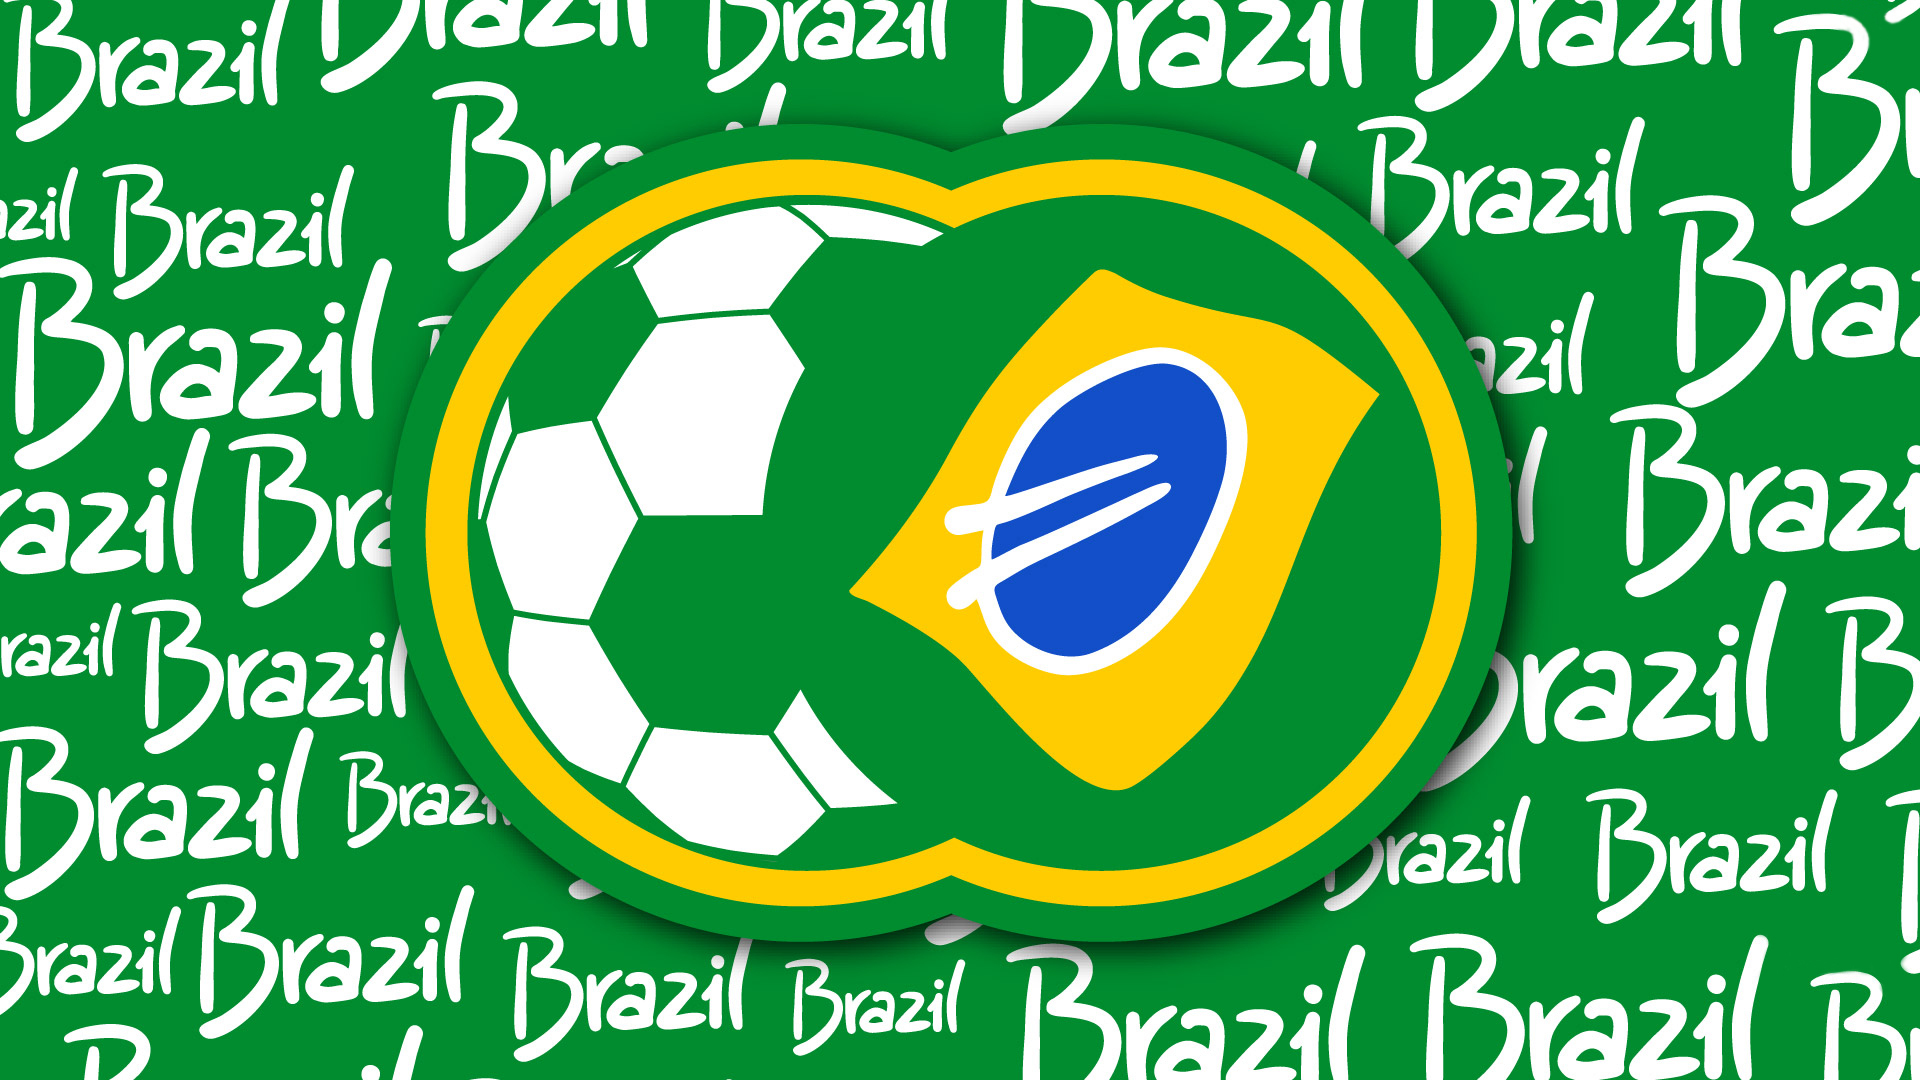 Zastaki.com - Обои на рабочий стол на Чемпионате мира по футболу в Бразилии 2014